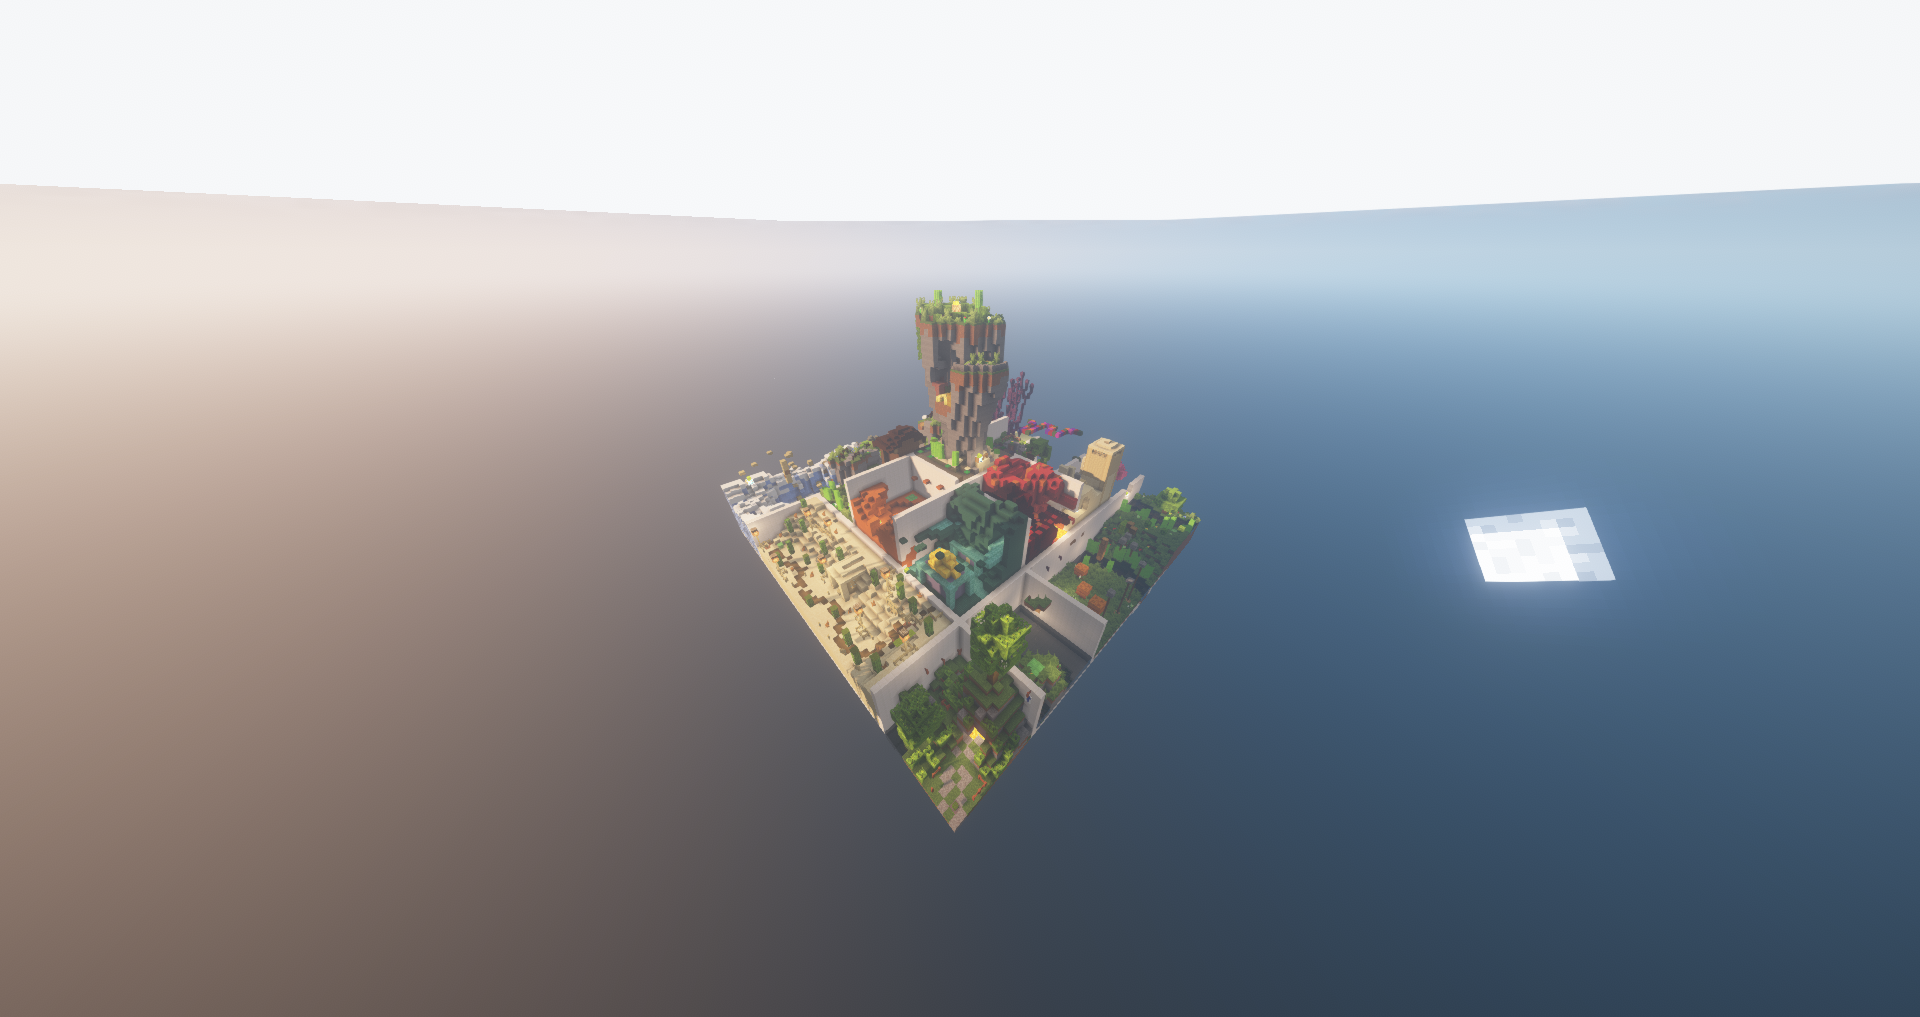 Minecraft Parkour Map